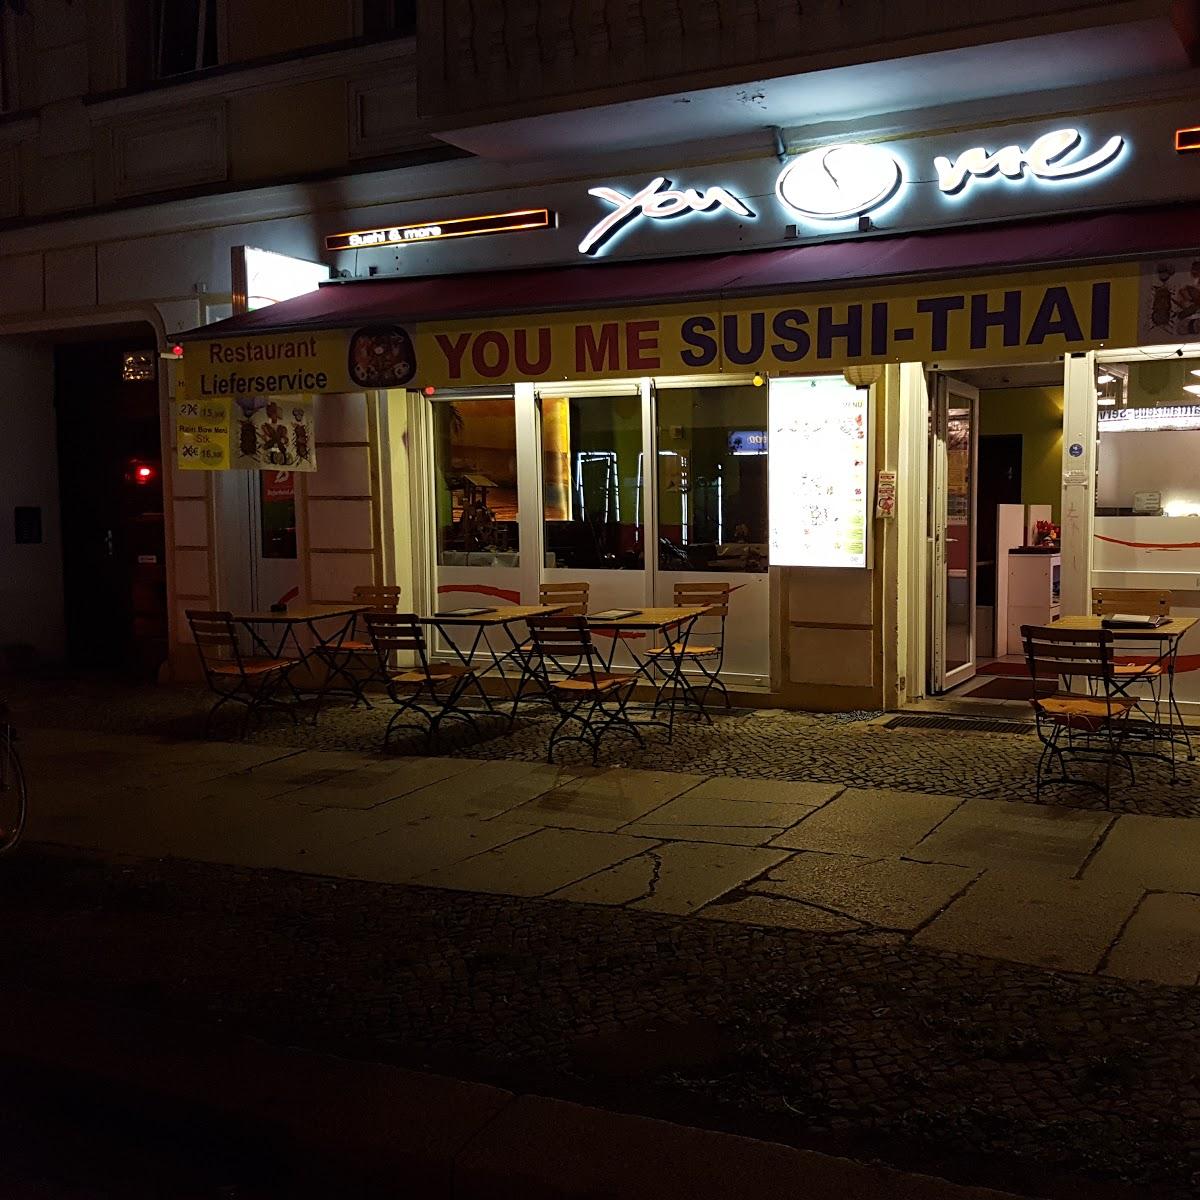 Restaurant "Restaurant , Lieferservic You Me - Sushi - Thai" in Berlin